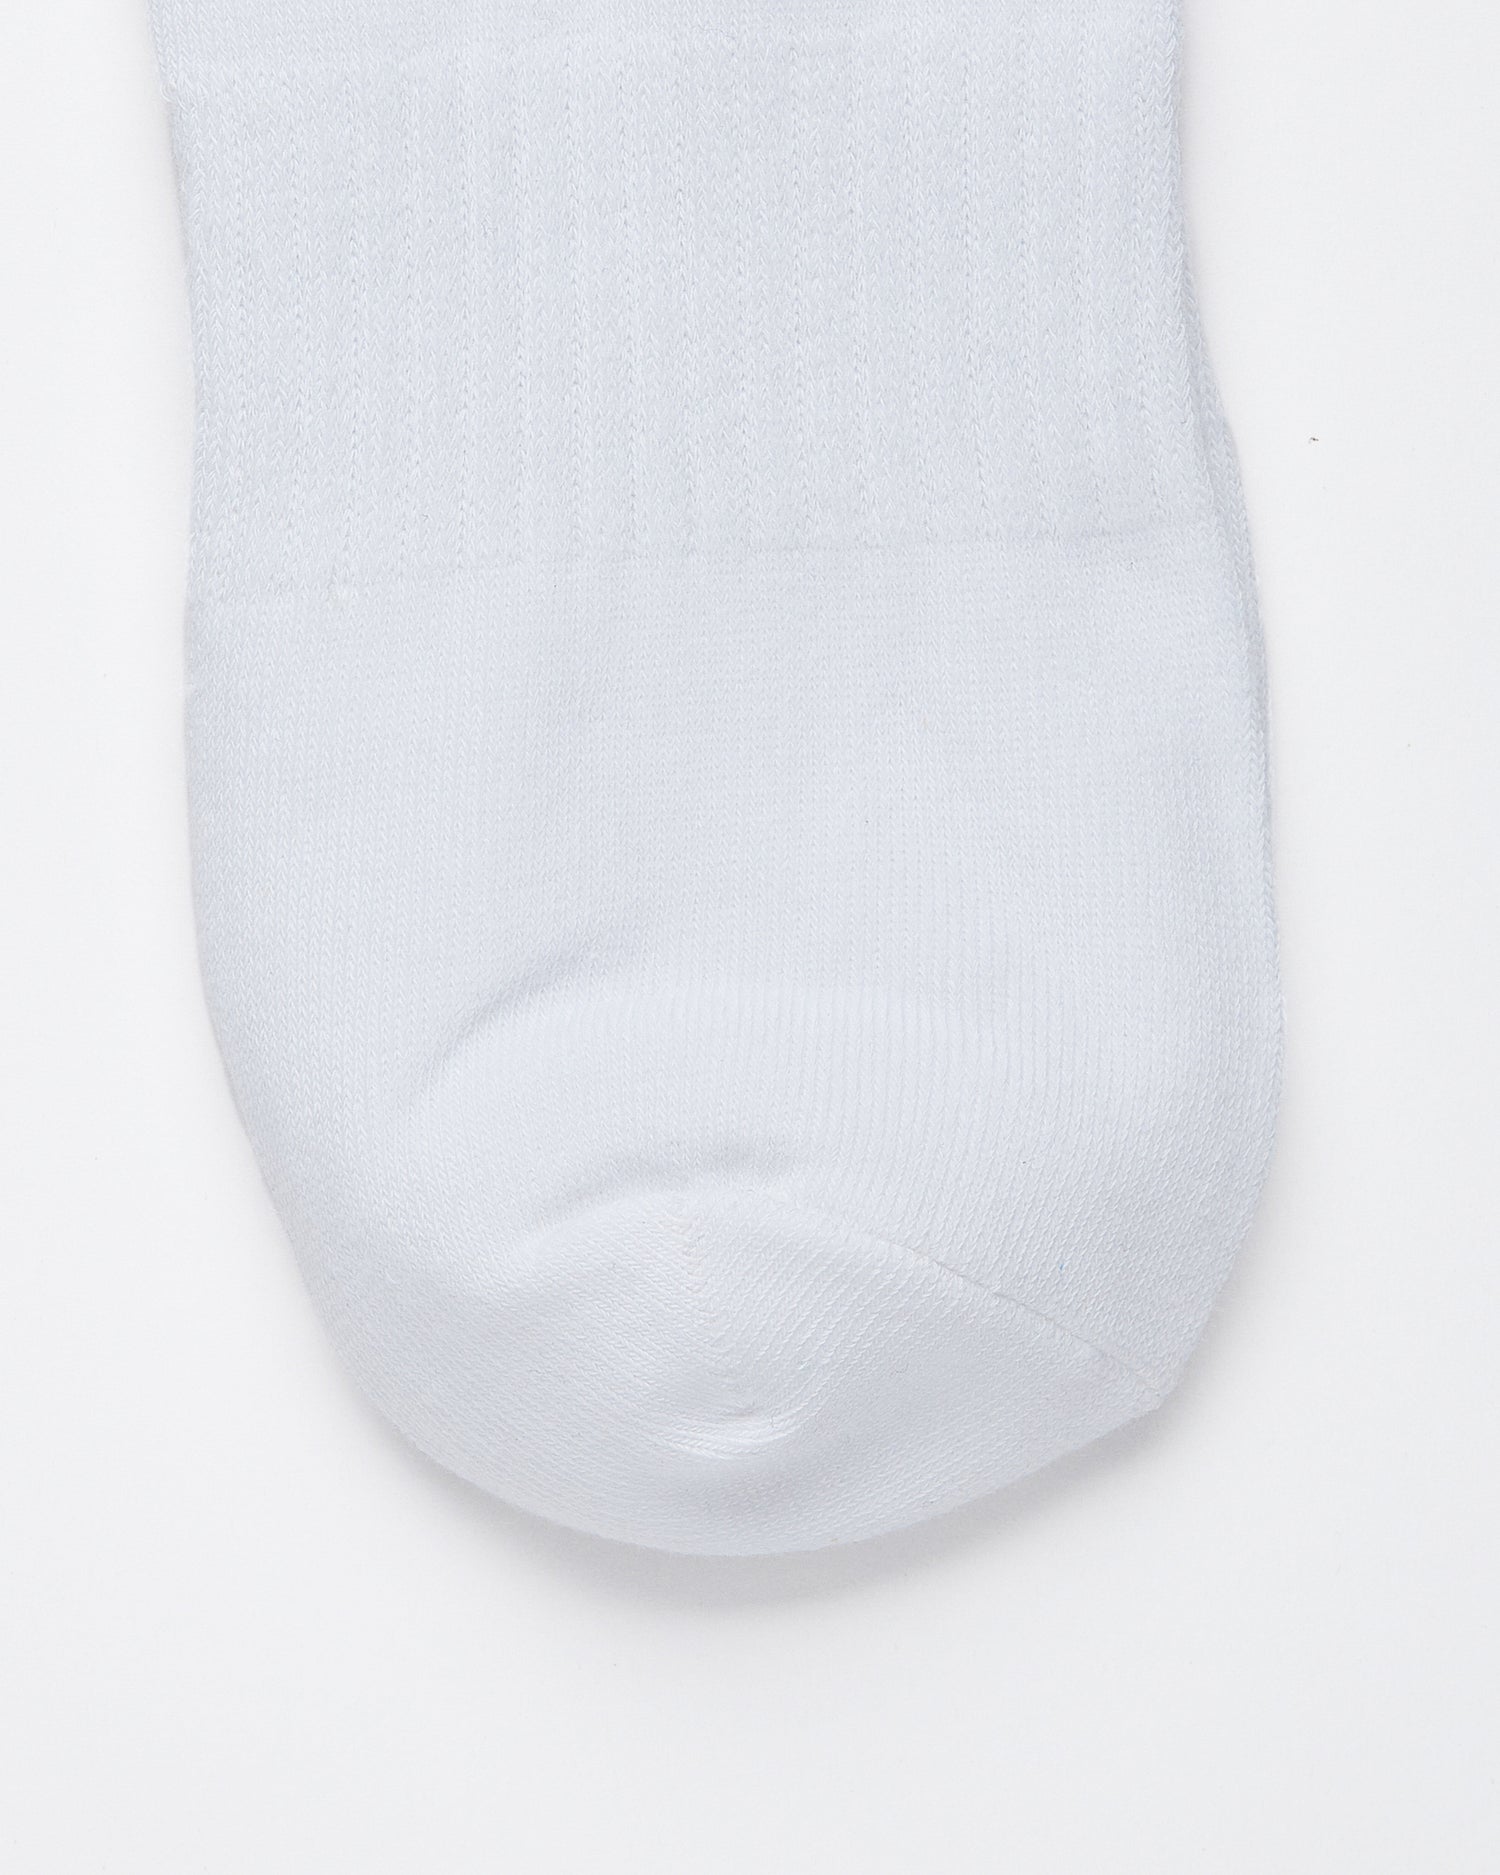 NIK White 1 Pairs Quarter Socks 2.10